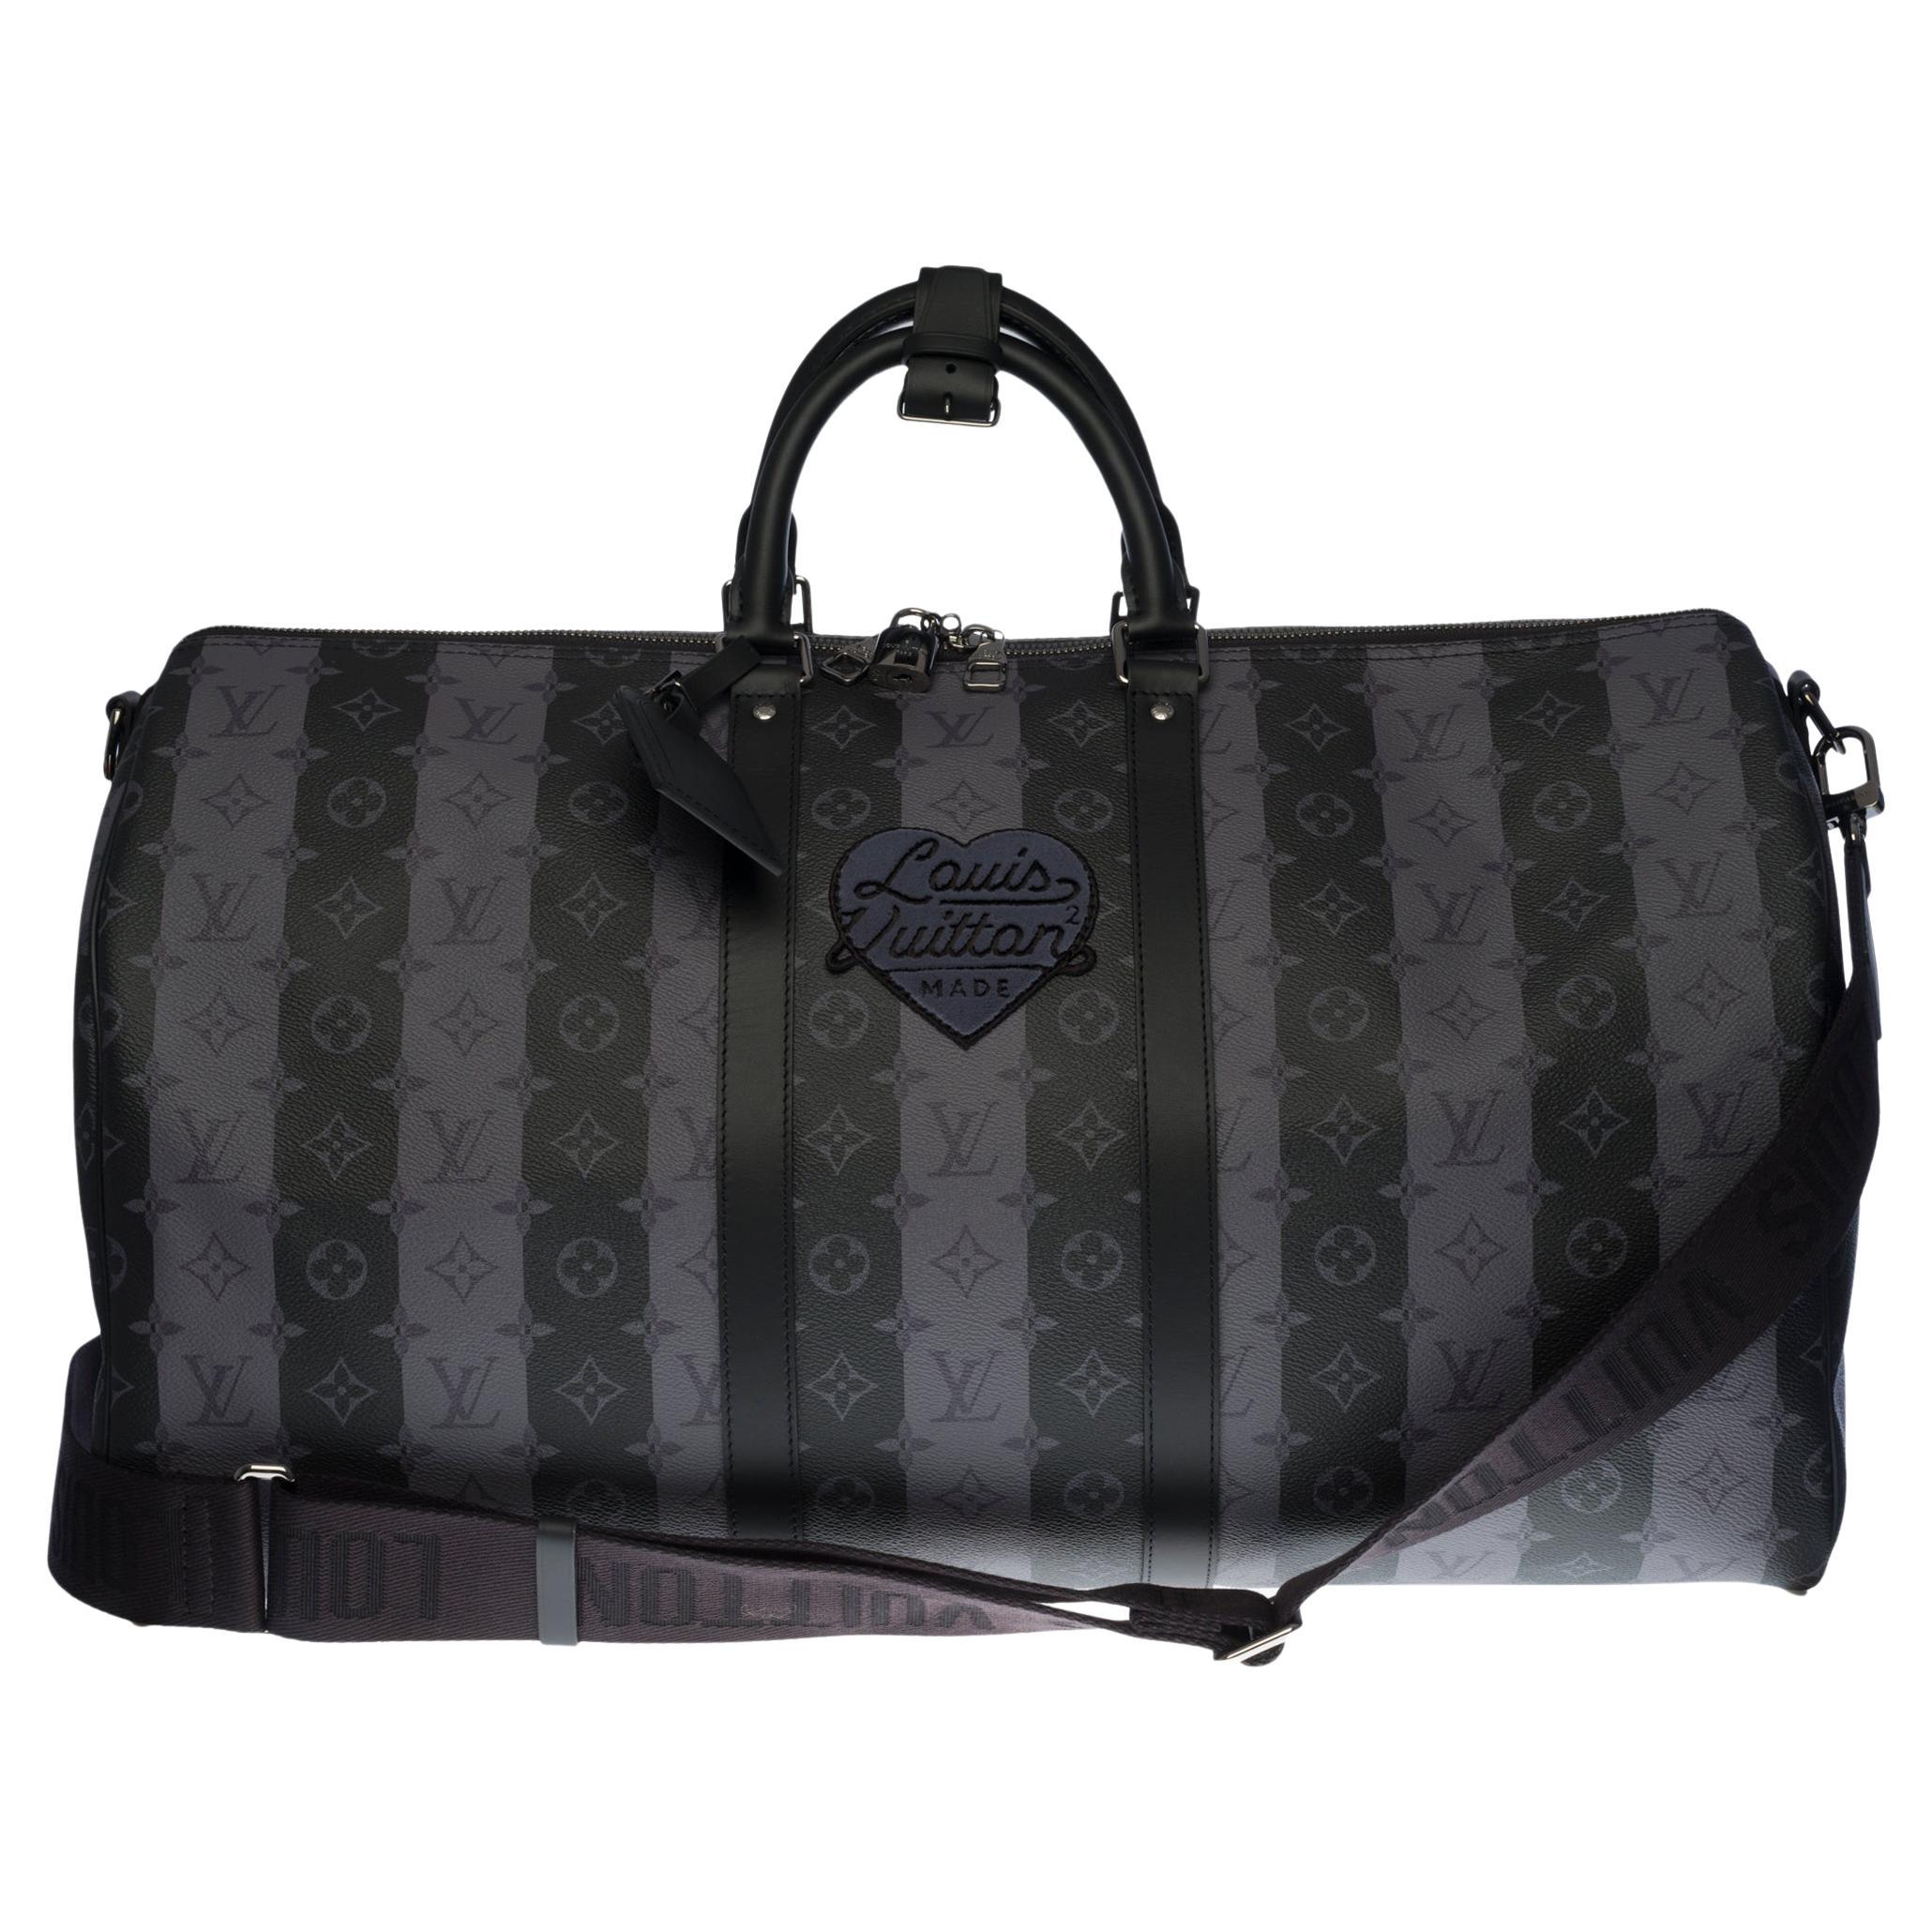 NEW-Louis Vuitton keepall 55 strap Travel bag in Stripes canvas by Abloh/Nigo